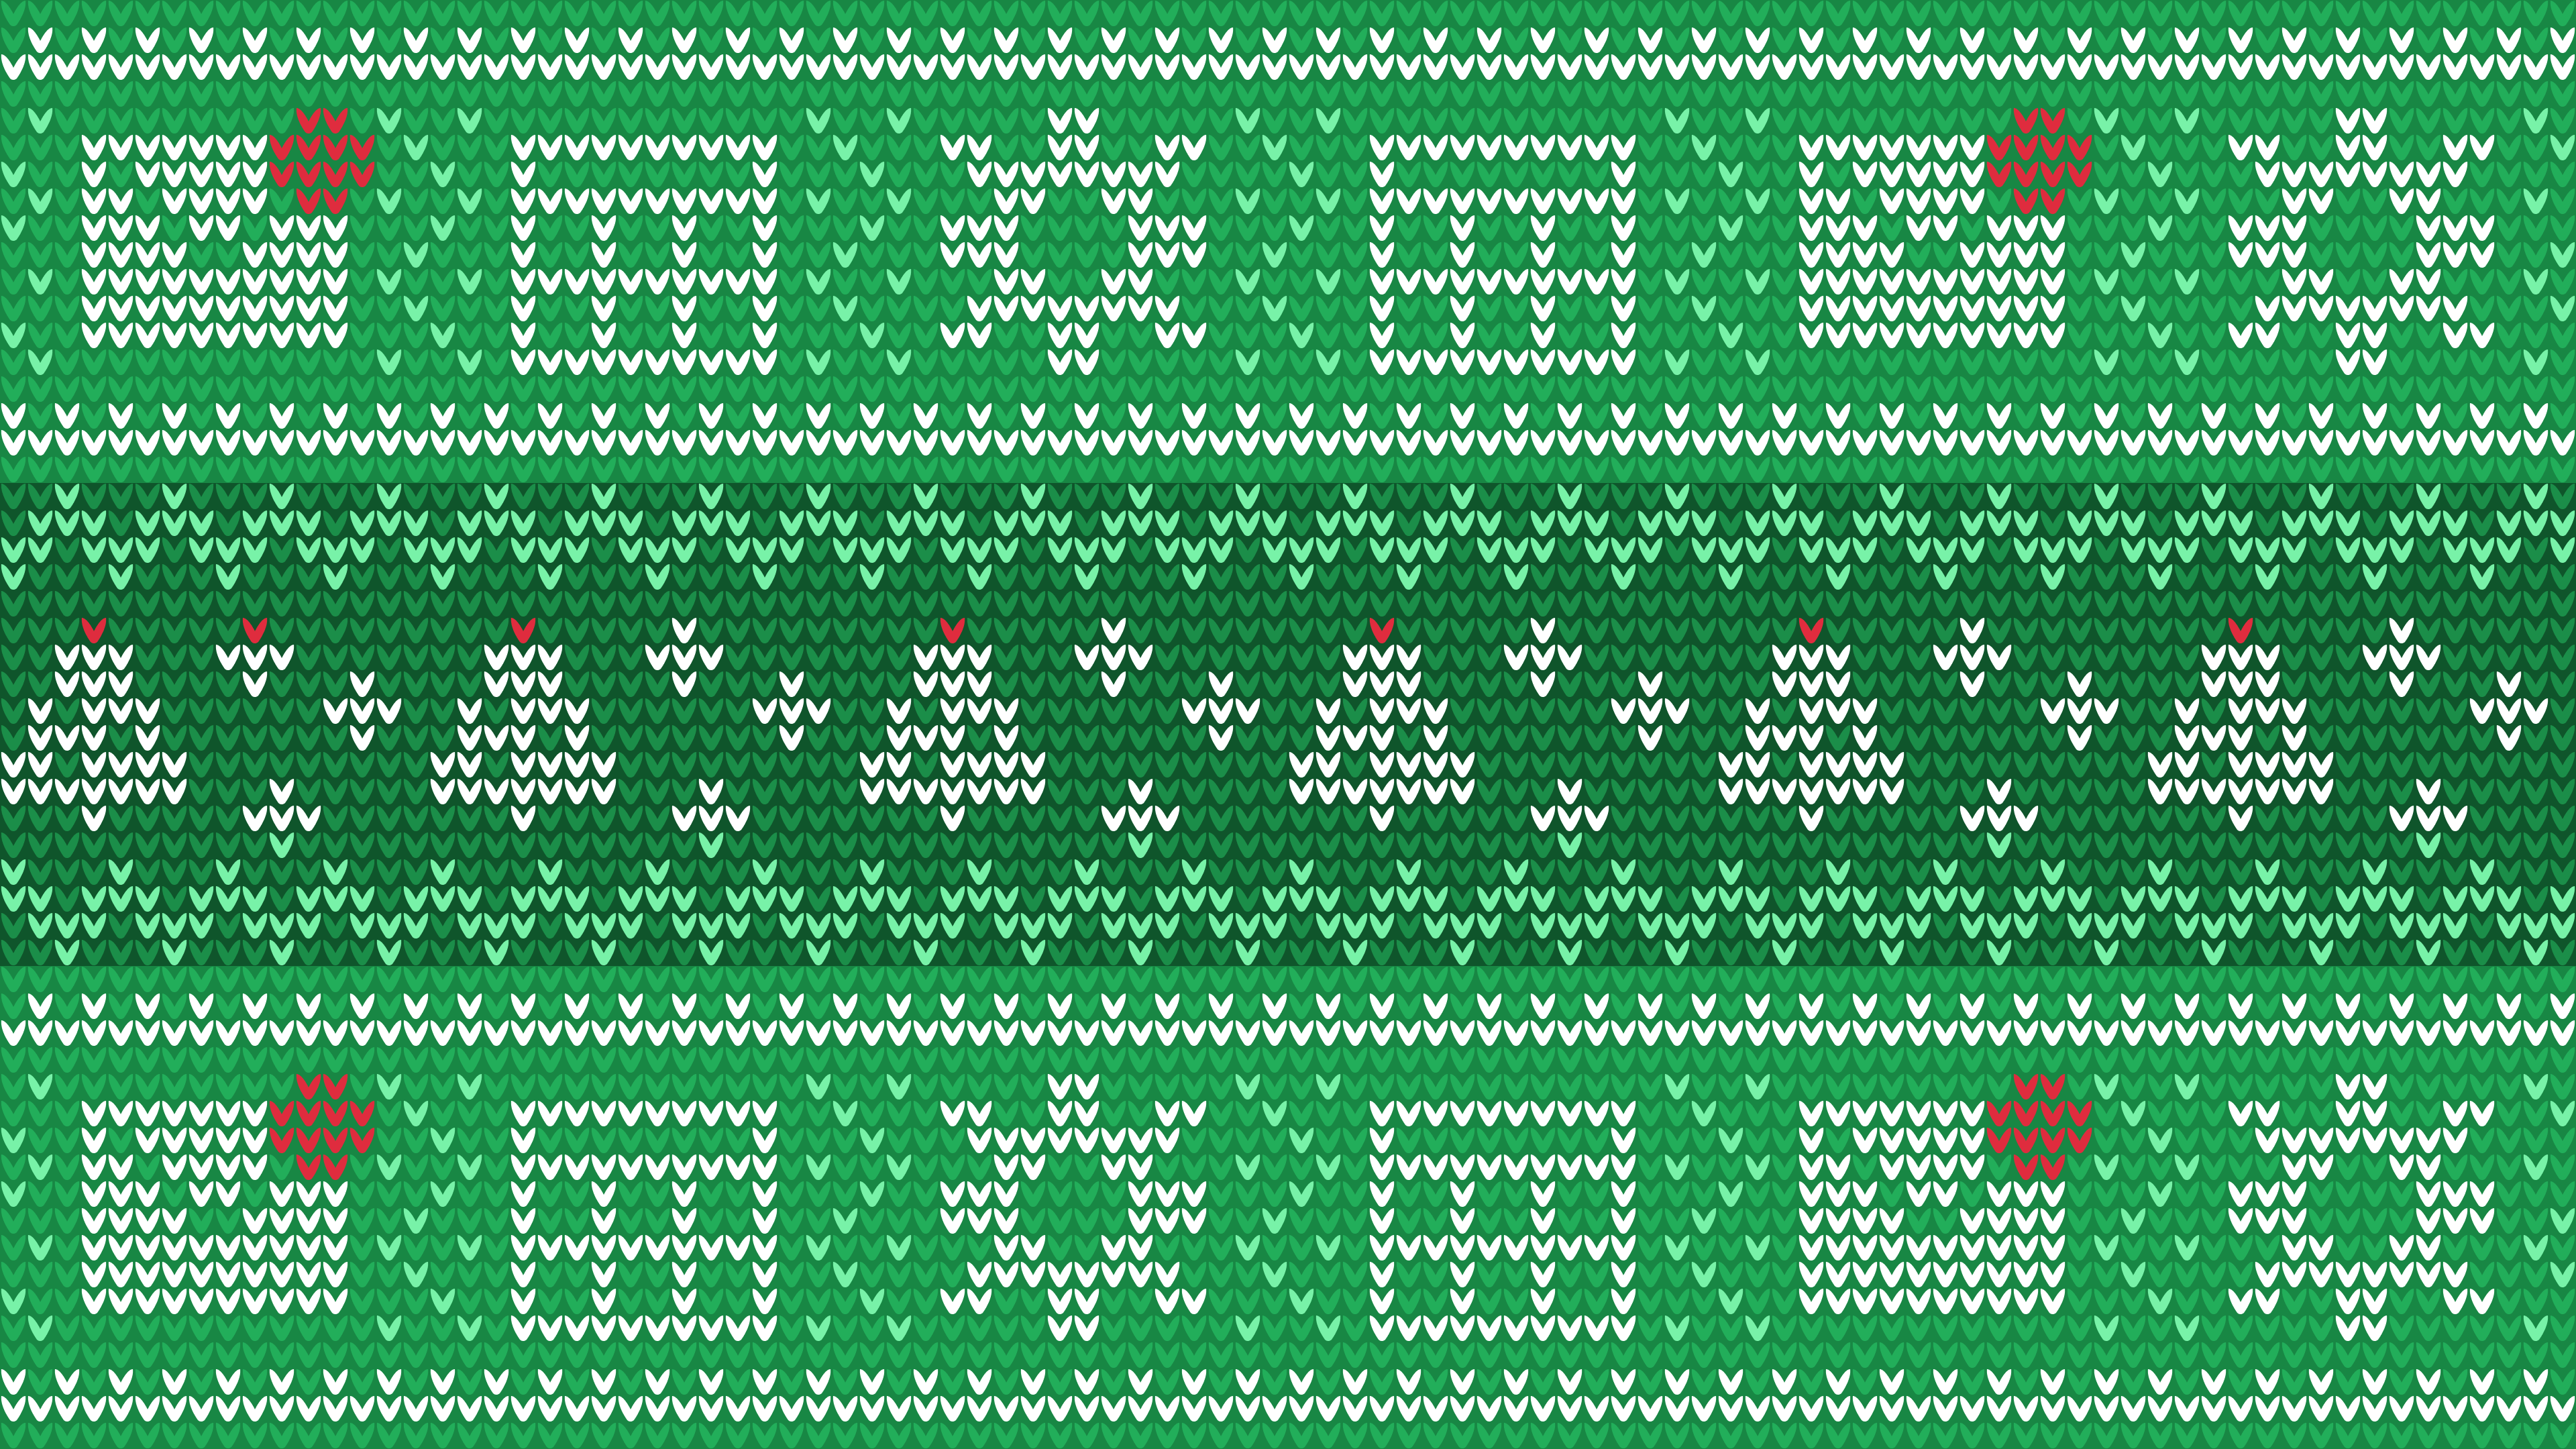 Wallpaper, Microsoft, sweater, festivals, pixel art, pixelated, Christmas Tree, green 3840x2160